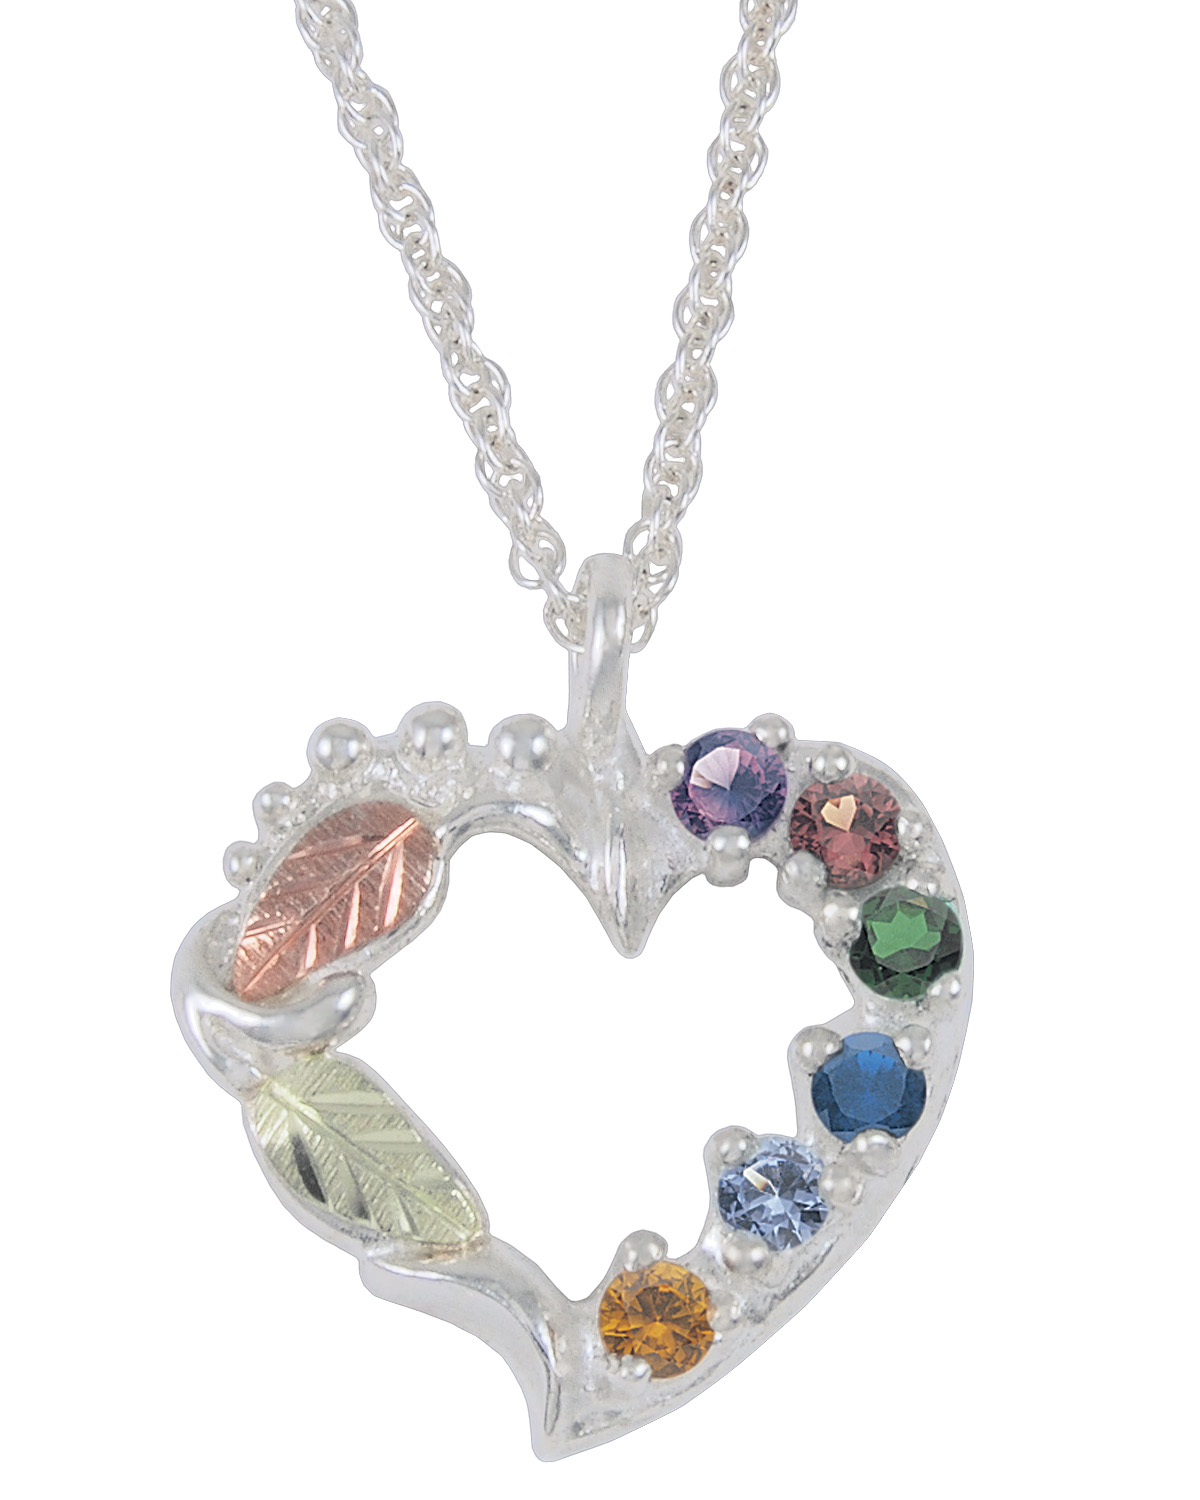  Amethyst, Garnet, Emerald, Sapphire, Aquamarine, Citrine Heart Pendant Necklace, Sterling Silver. 